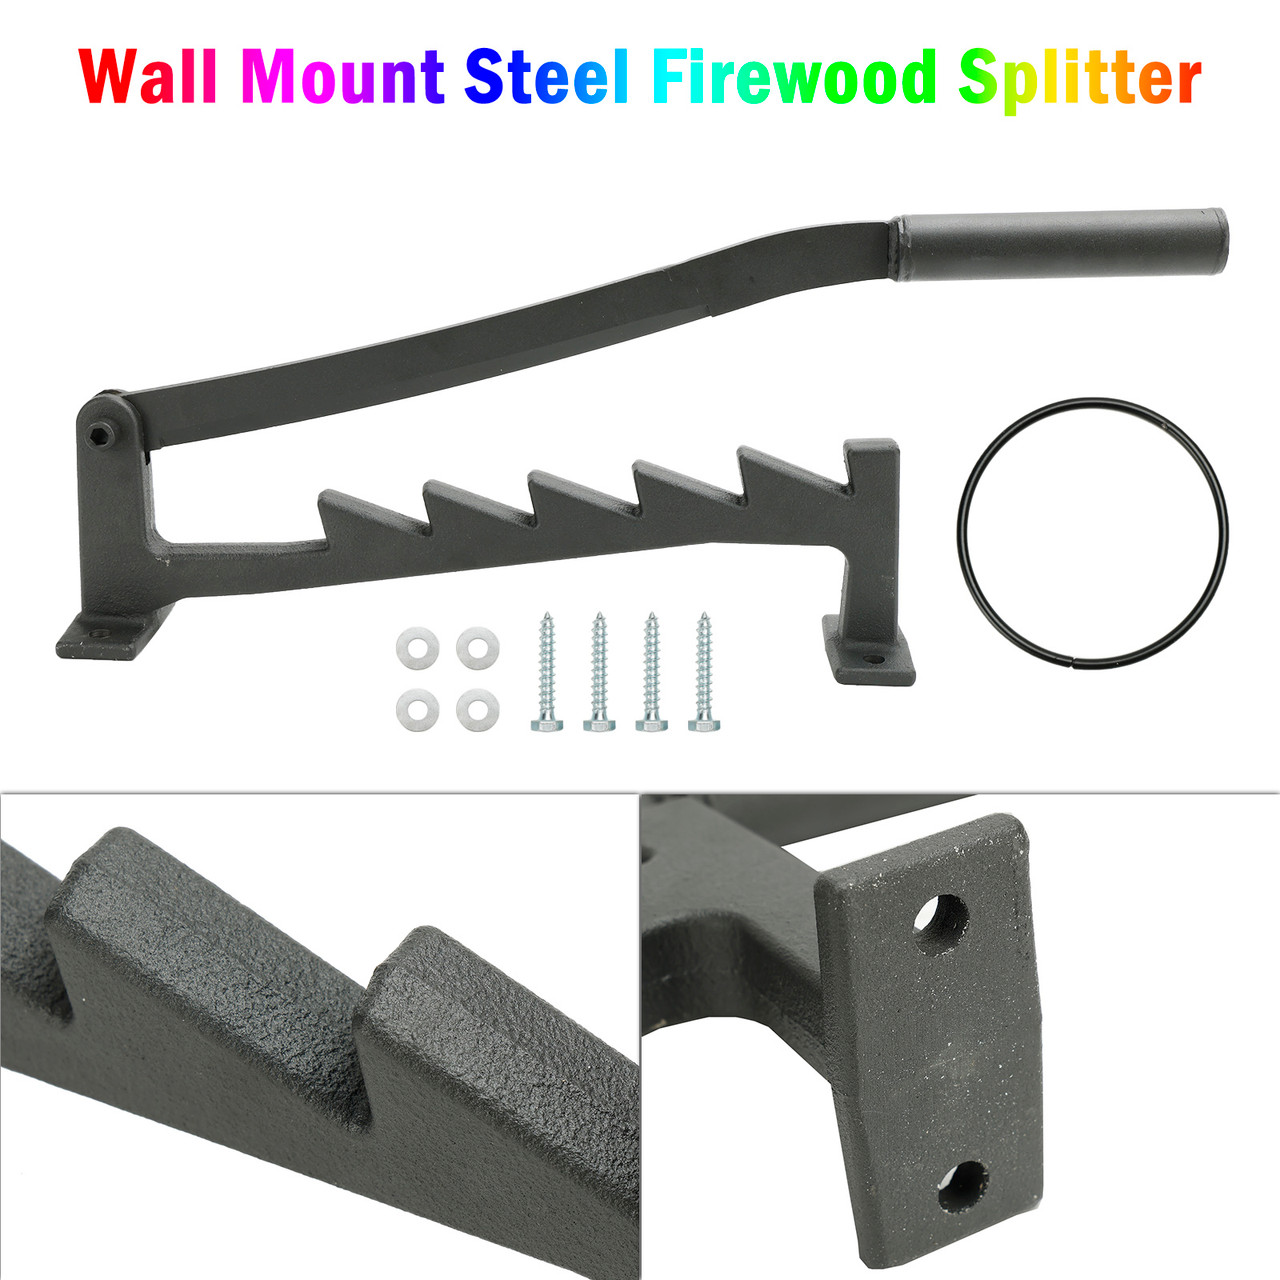 Wall Mount Steel Firewood Splitter Kindling Wood Cracker Cutting Tool for Home